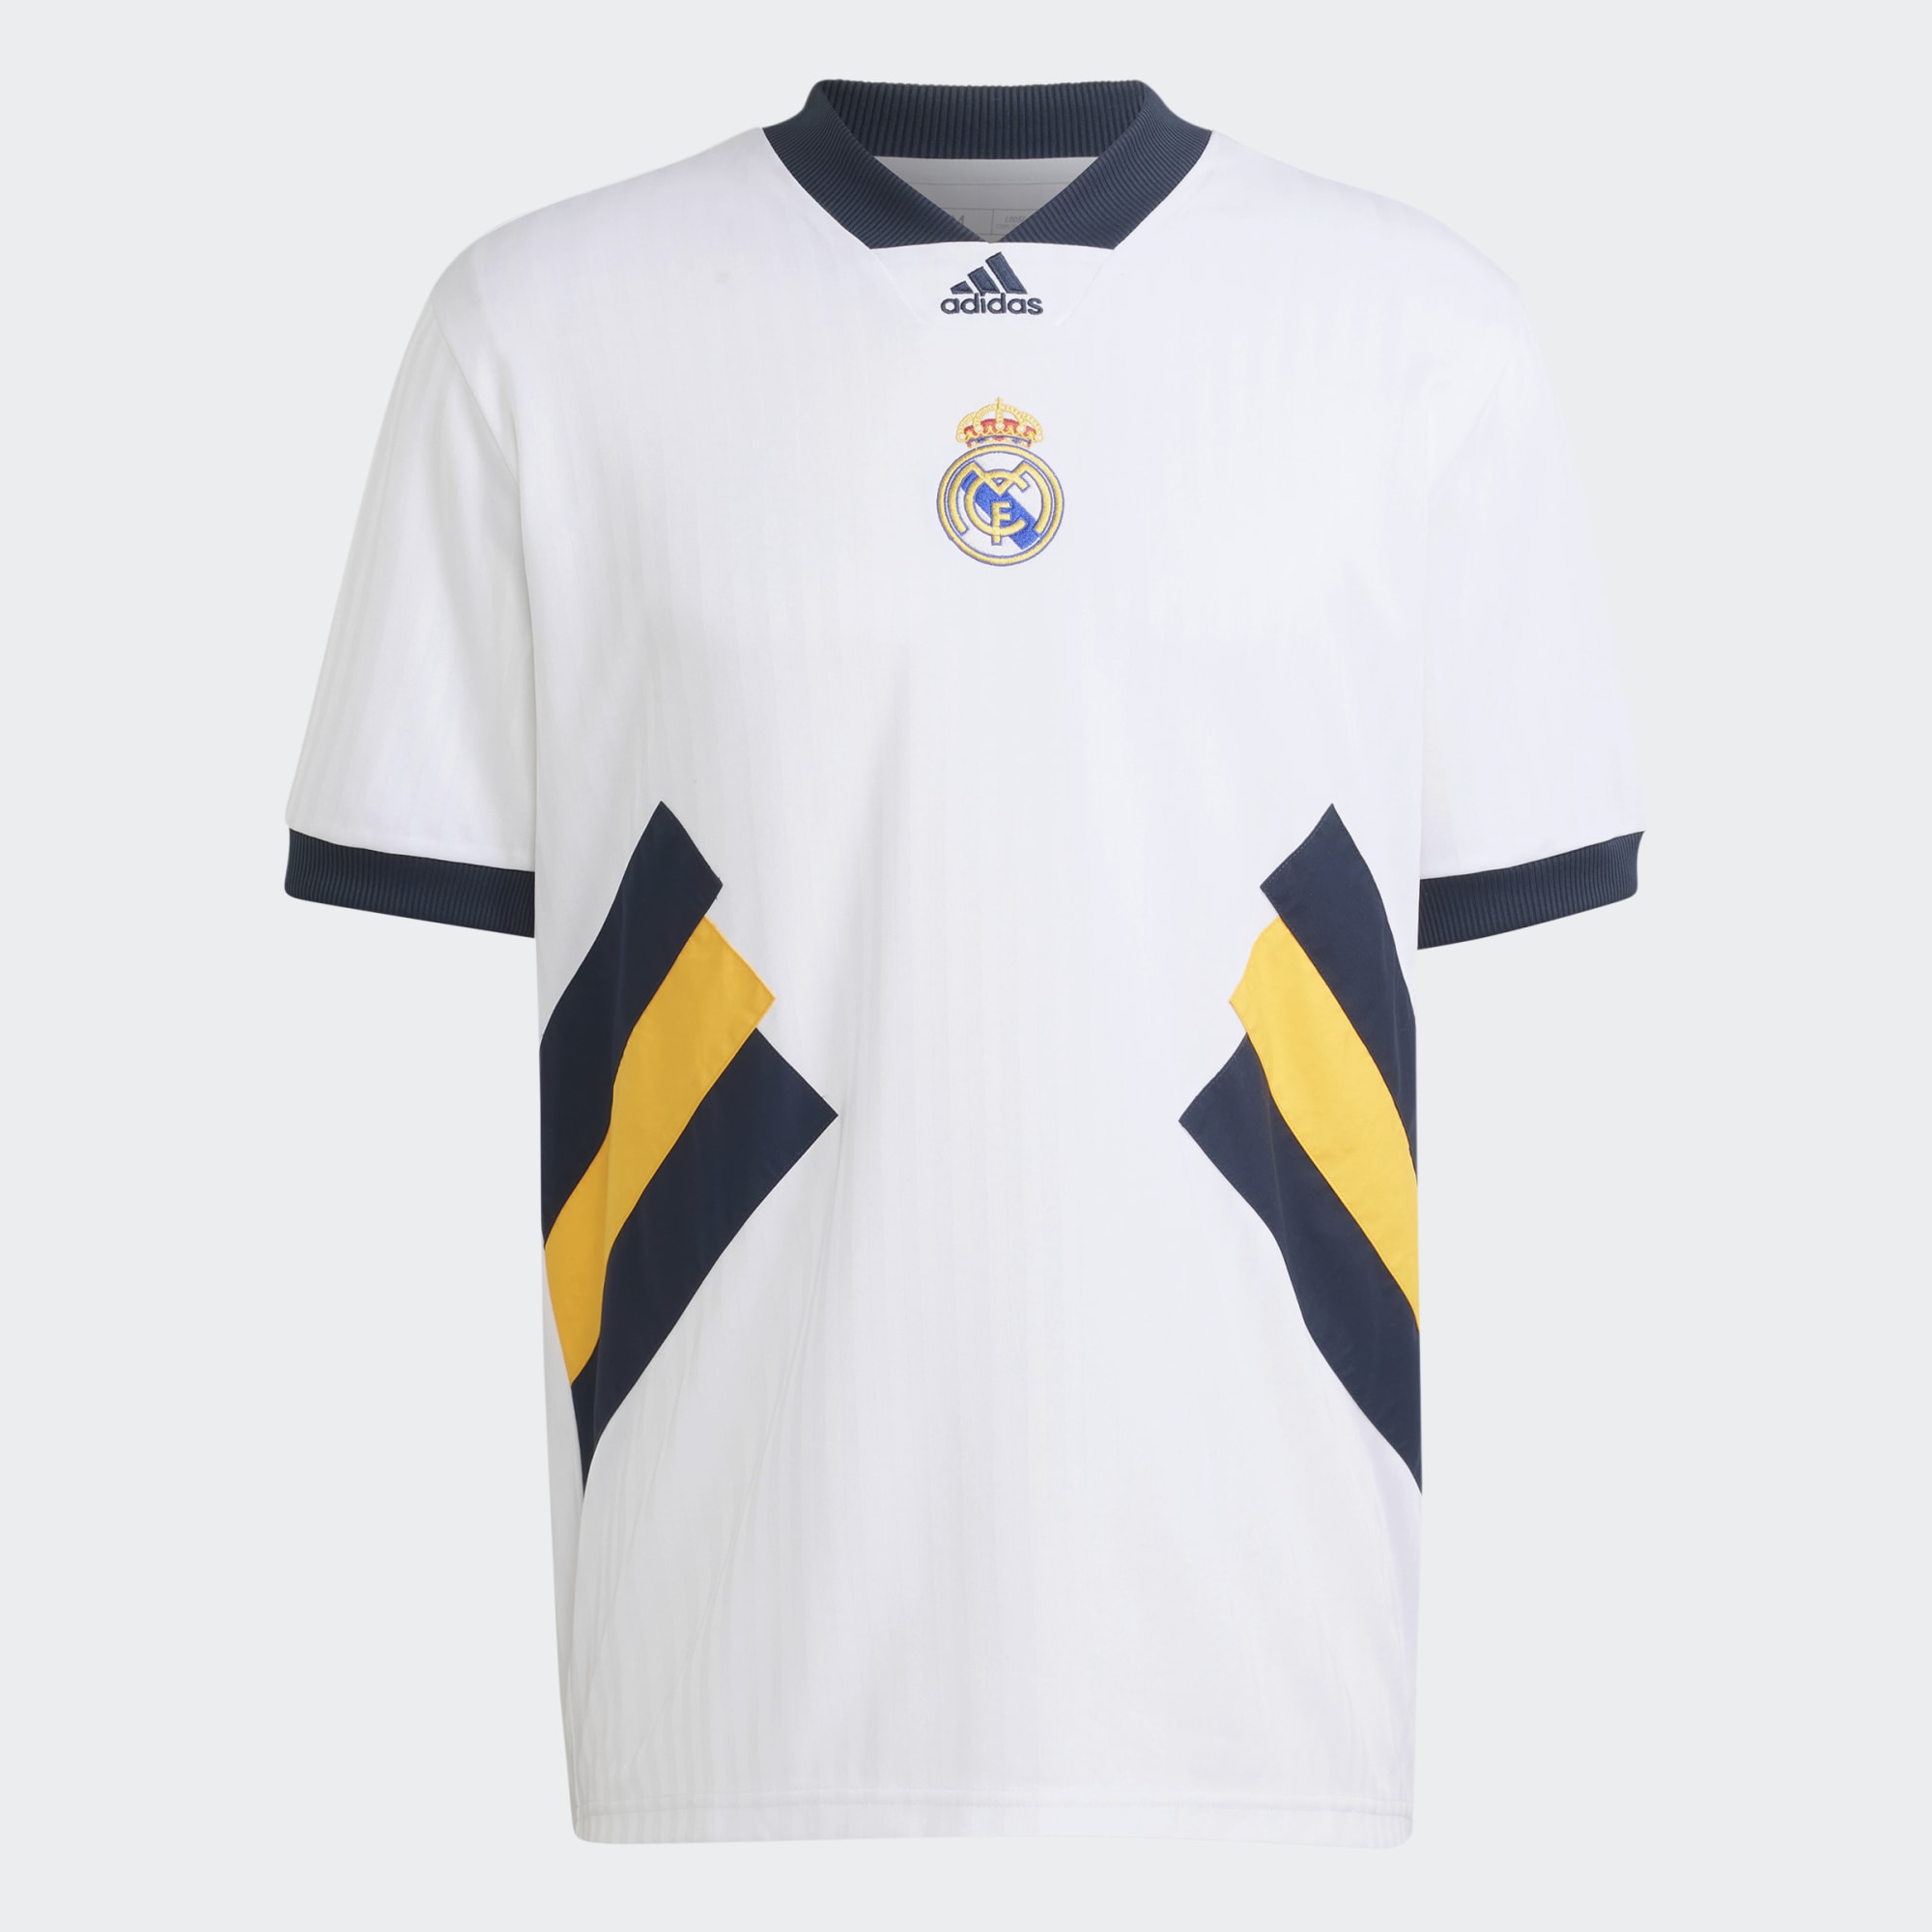 Real Madrid 2019/20 adidas Away Kit - FOOTBALL FASHION